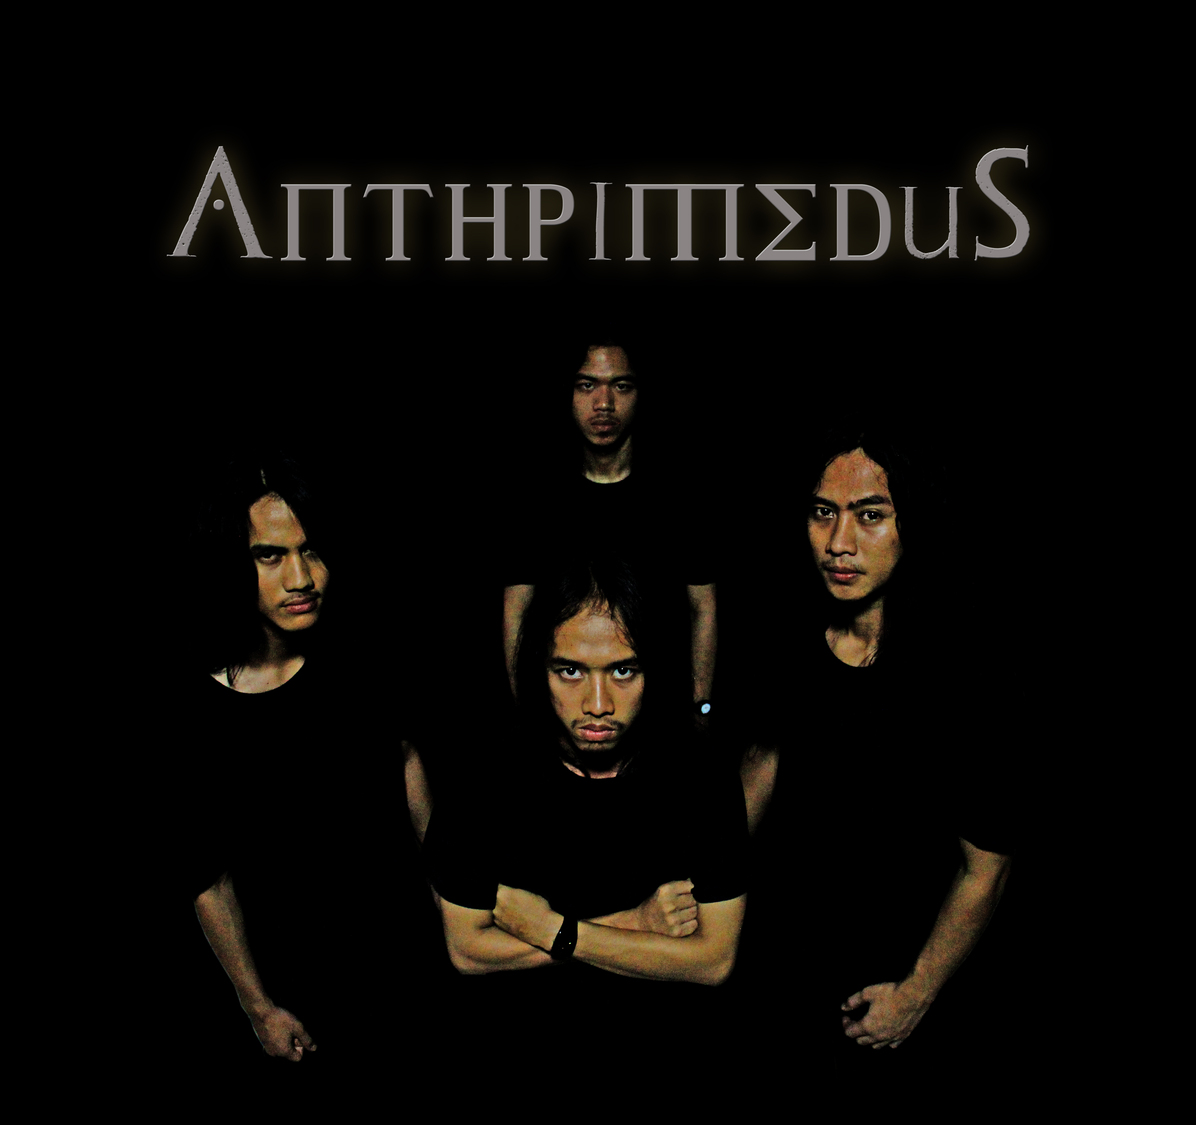 Anthpimedus Band Death Metal Thrash Metal Bekasi Dunia Rock